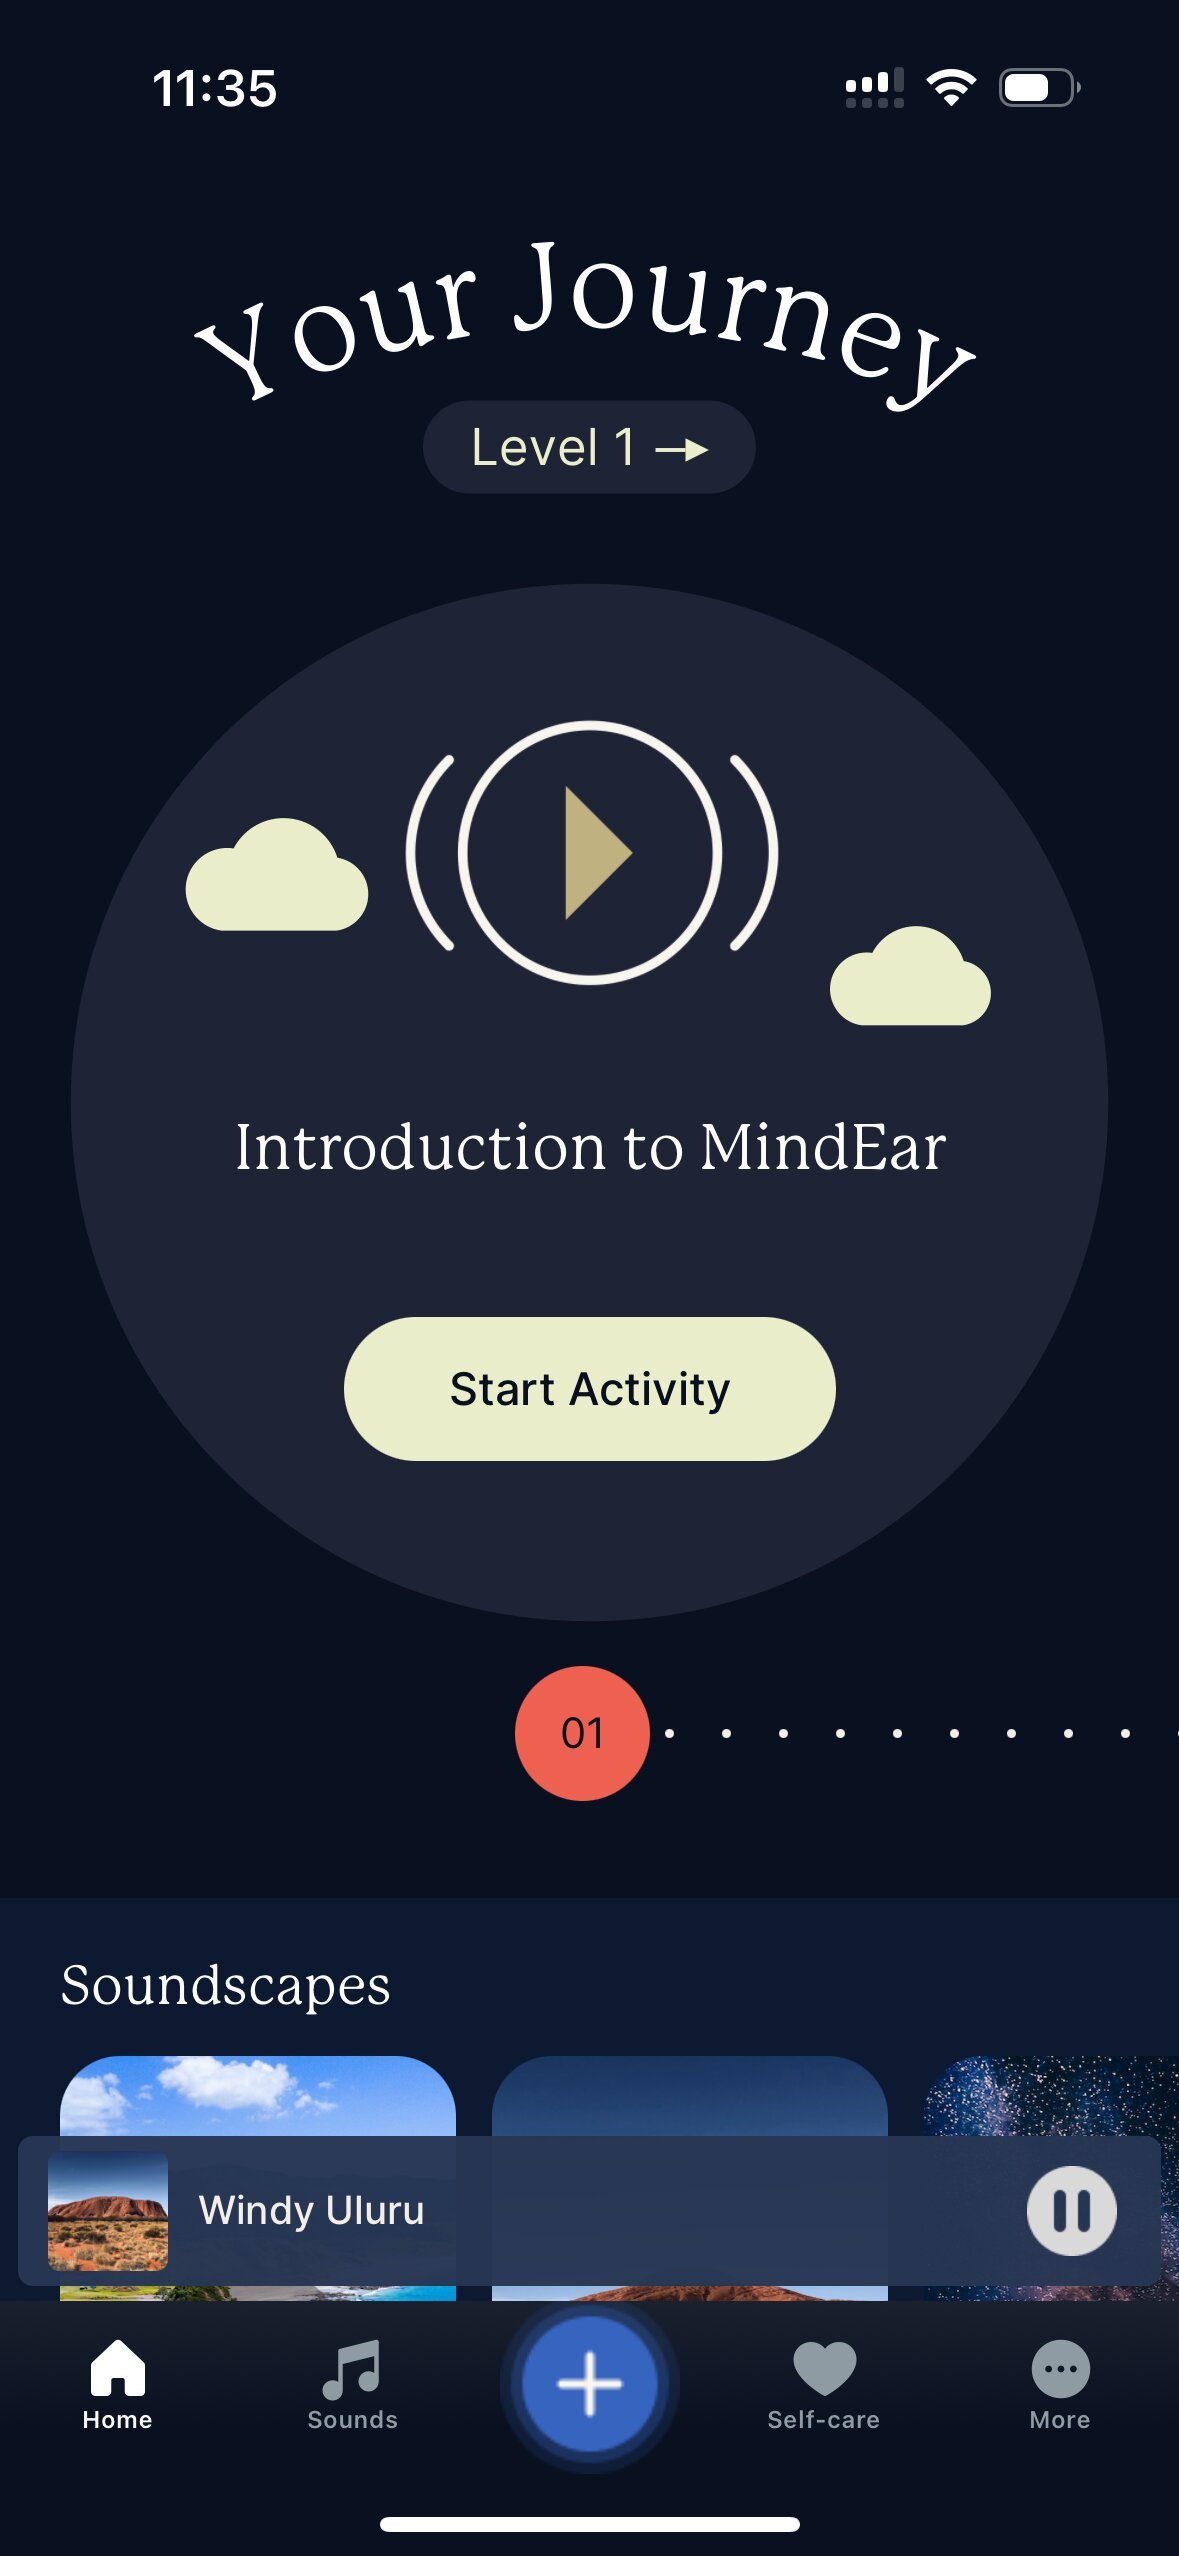 Team develops app to help train the brain to overcome tinnitus